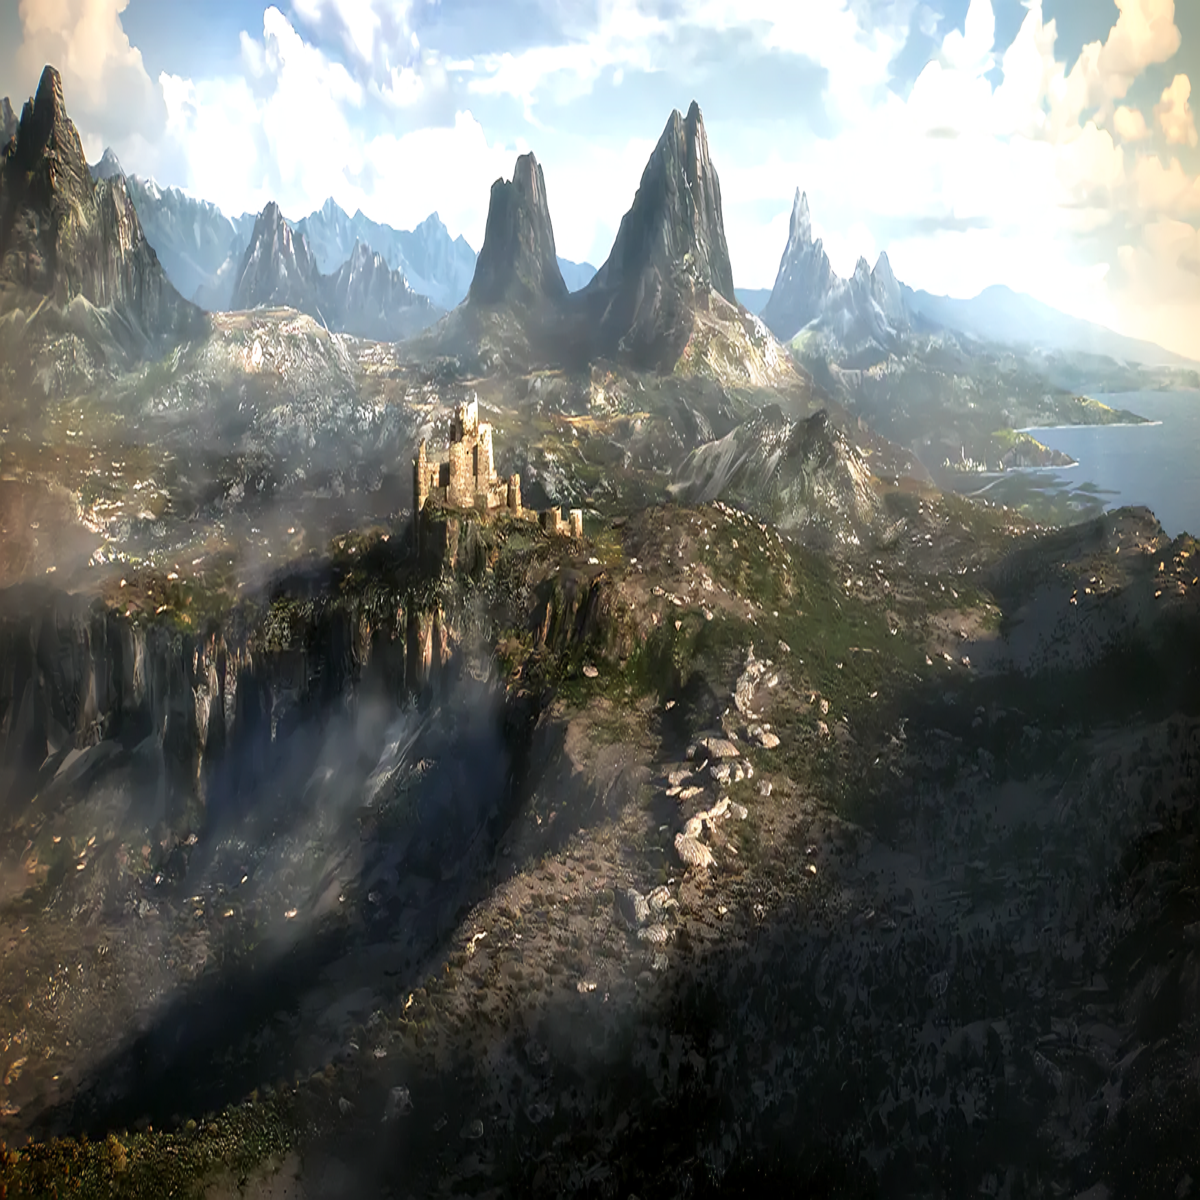 Should Bethesda make a New Game Engine before The Elder Scrolls 6